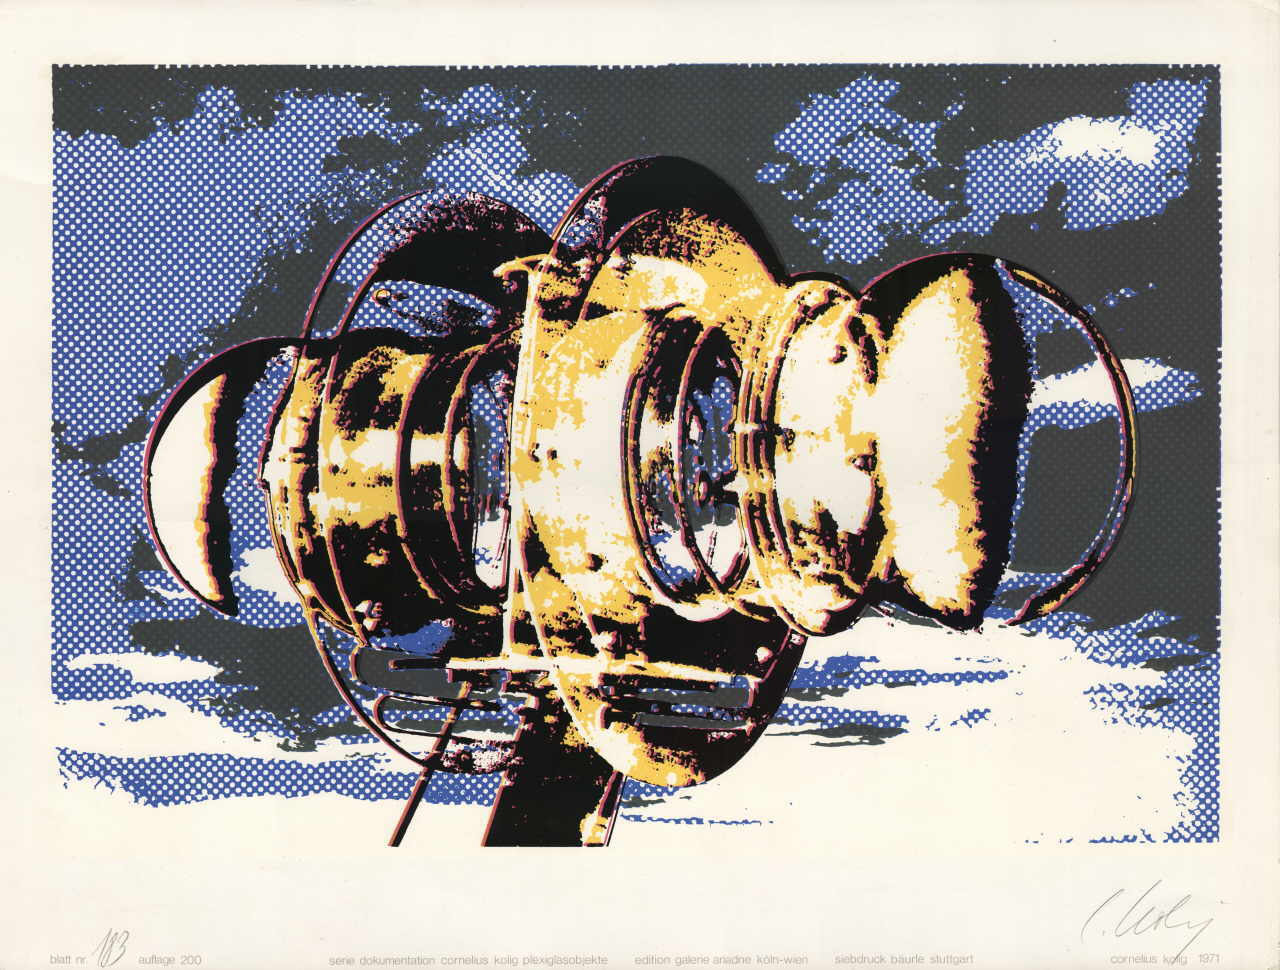 Kolig Cornelius 
Serie "Dokumentation Cornelius Kolig Plexiglasobjekte", 1971
silkscreen
Papiergröße 50 x 65 cm